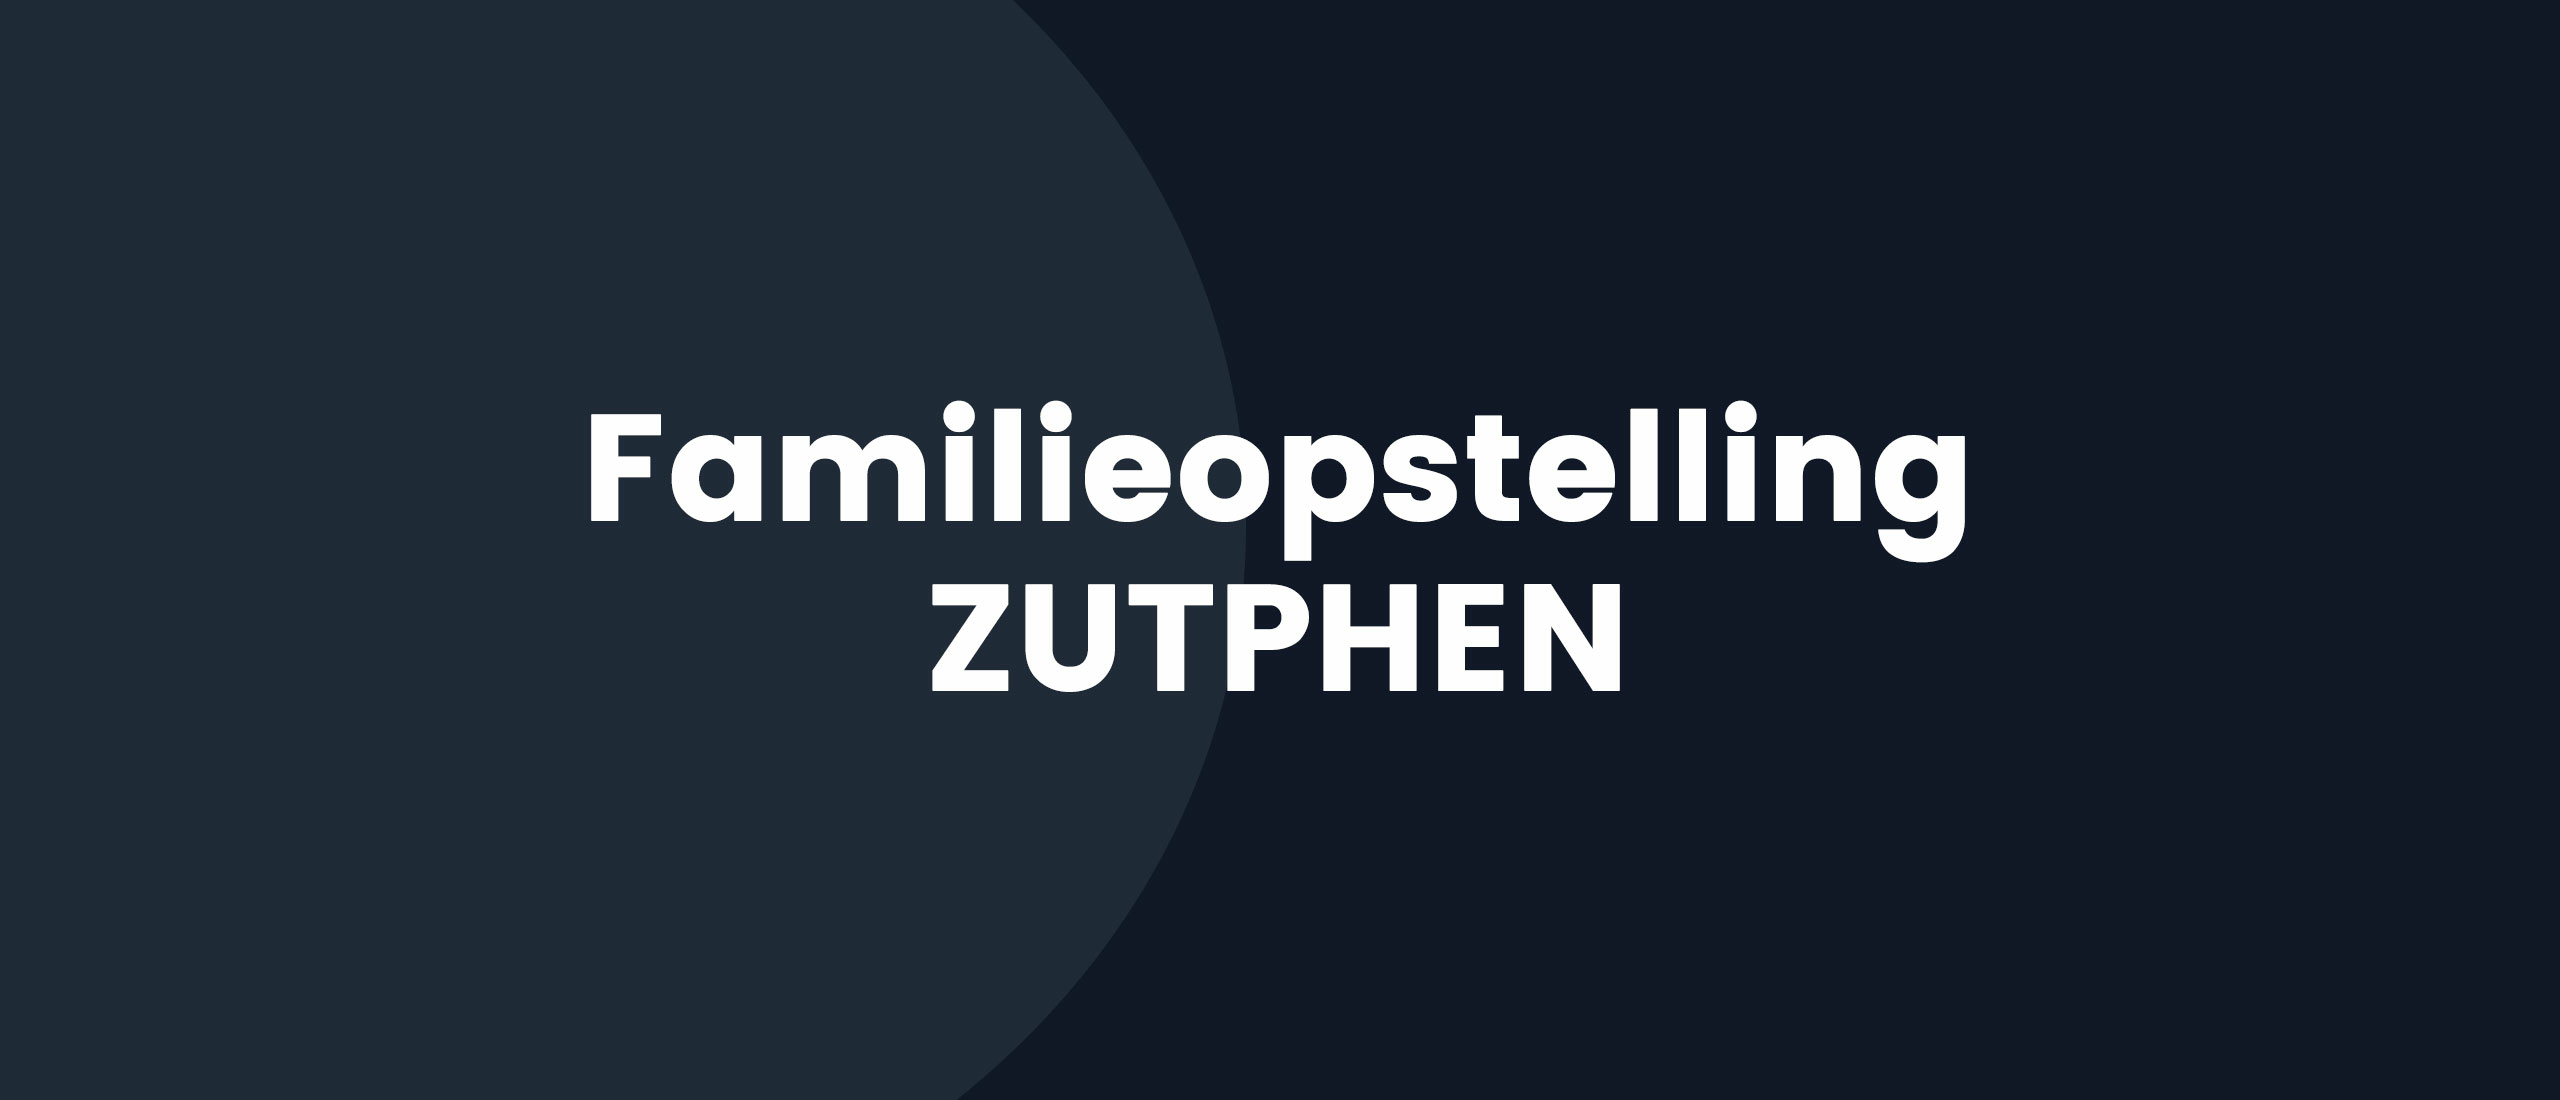 Familie opstelling Zutphen